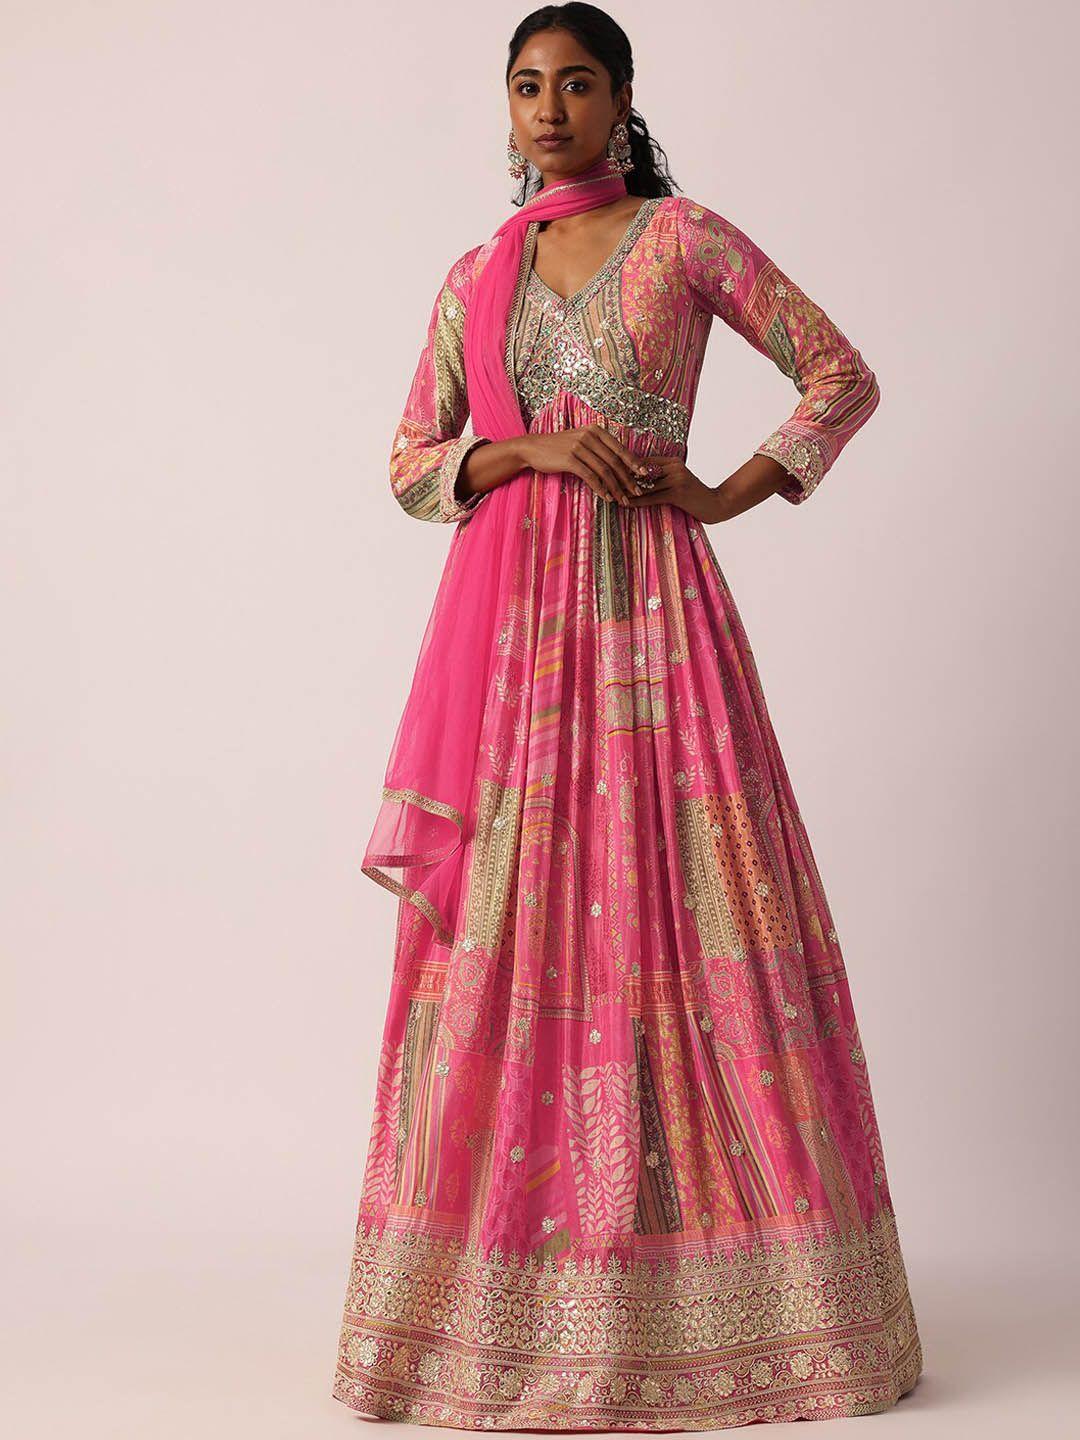 kalki fashion ethnic motifs printed v-neck embroidered maxi ethnic dress with dupatta